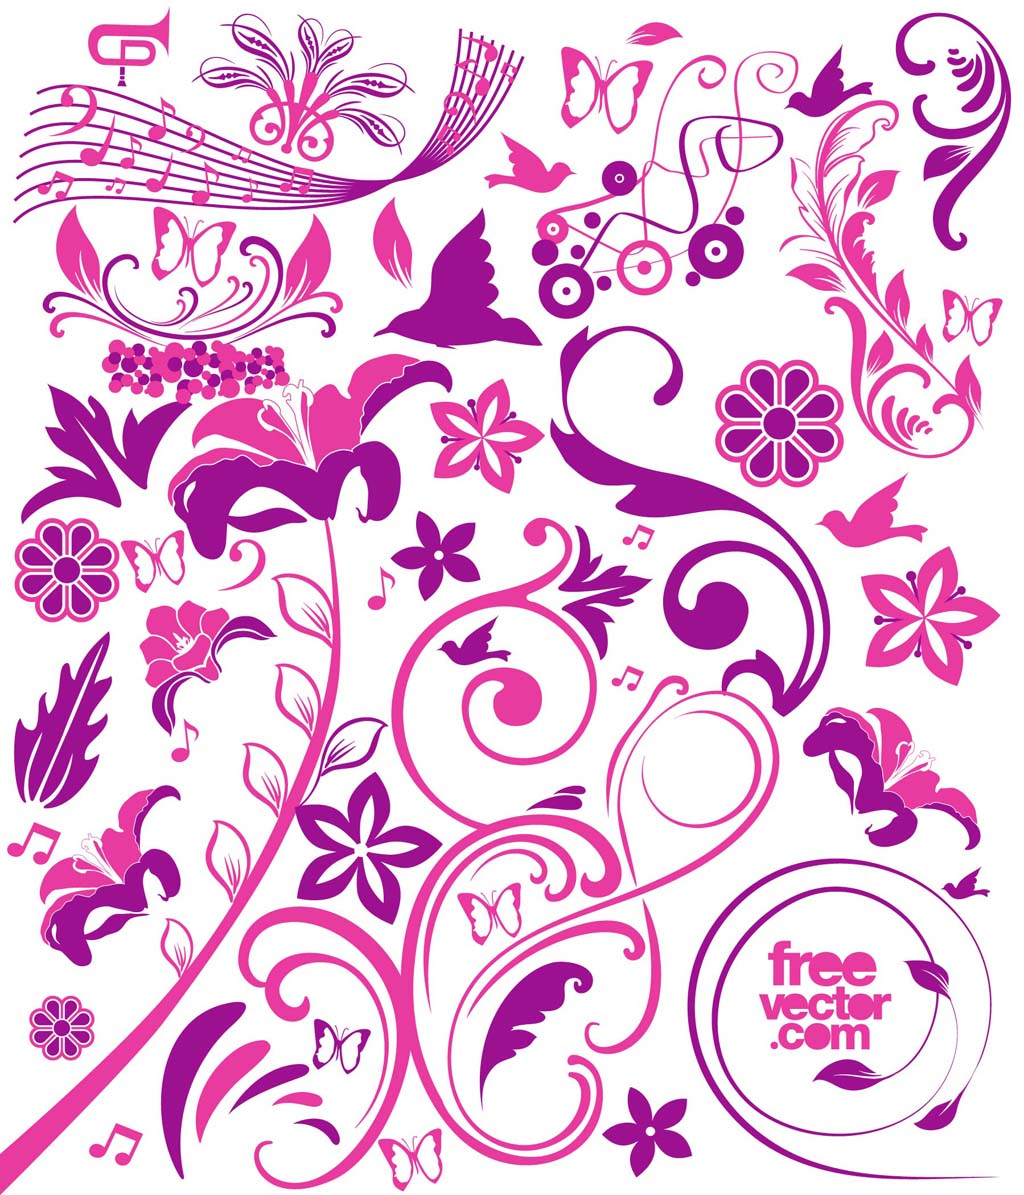 Download Pink Flowers Vectors Vector Art & Graphics | freevector.com